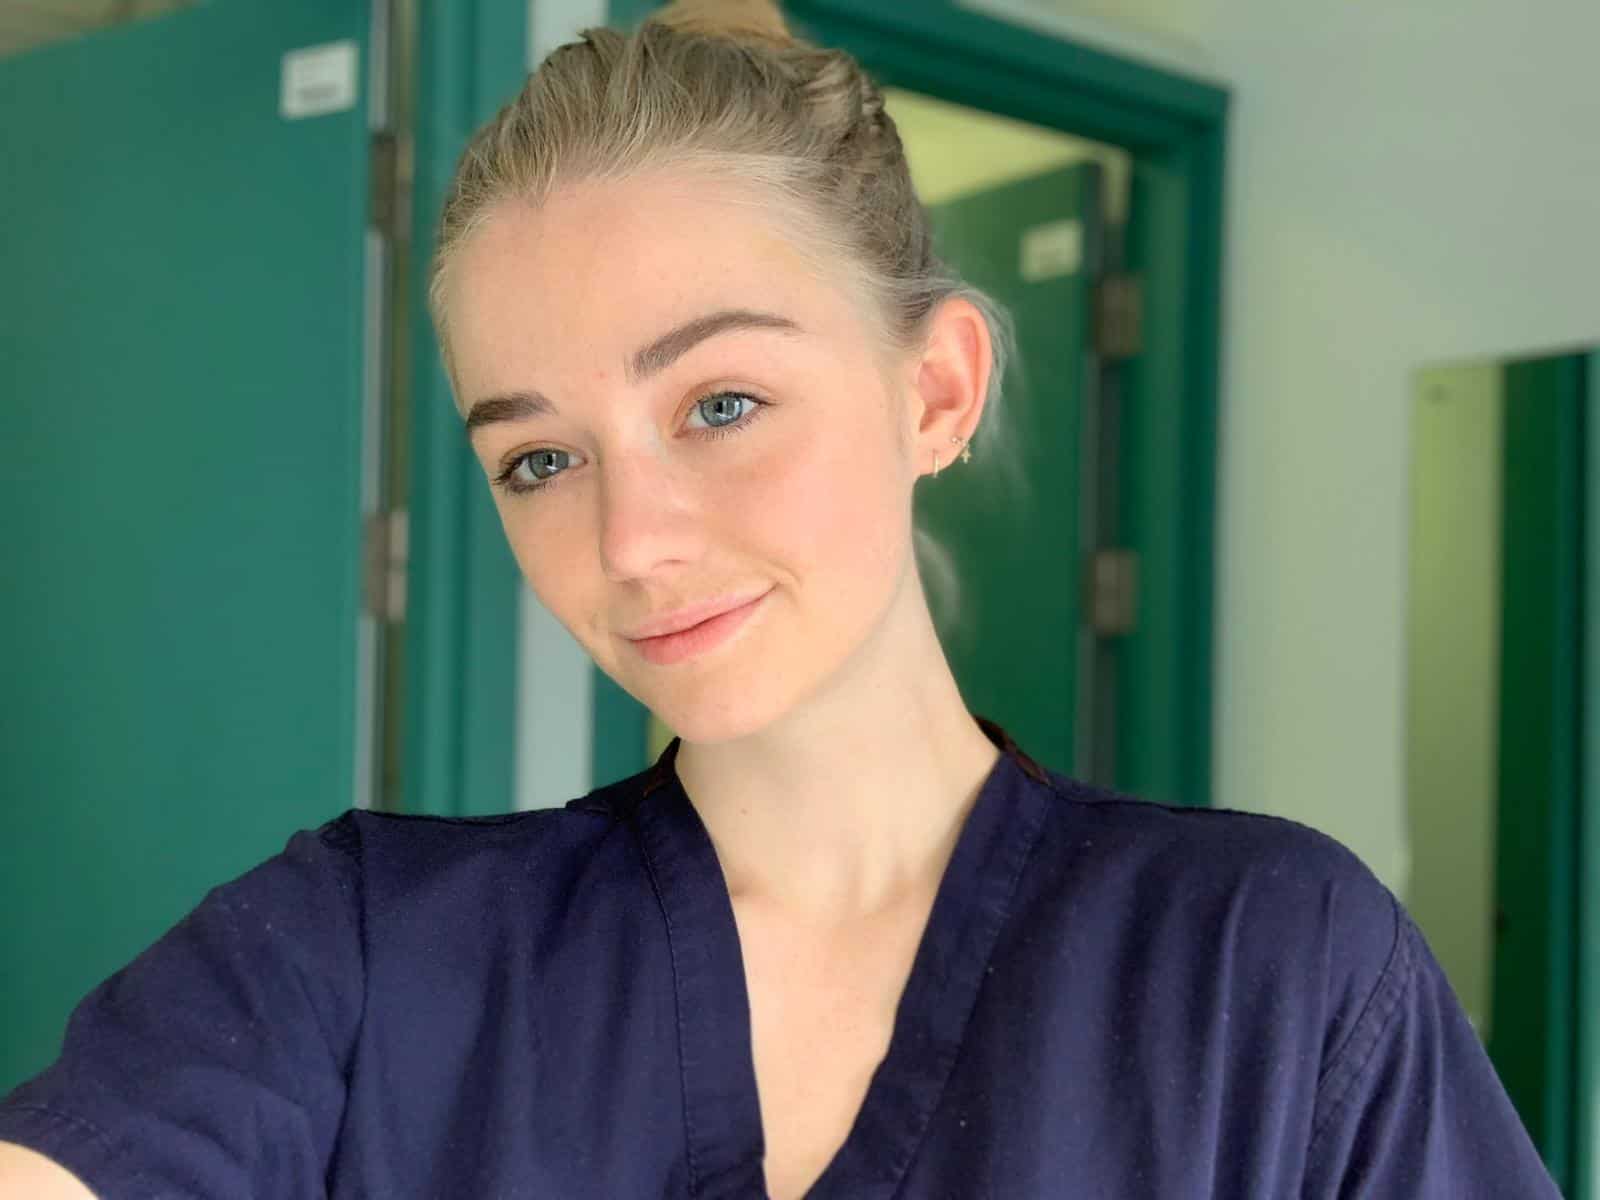 Elizabeth Willis, 22, is an intensive care nurse